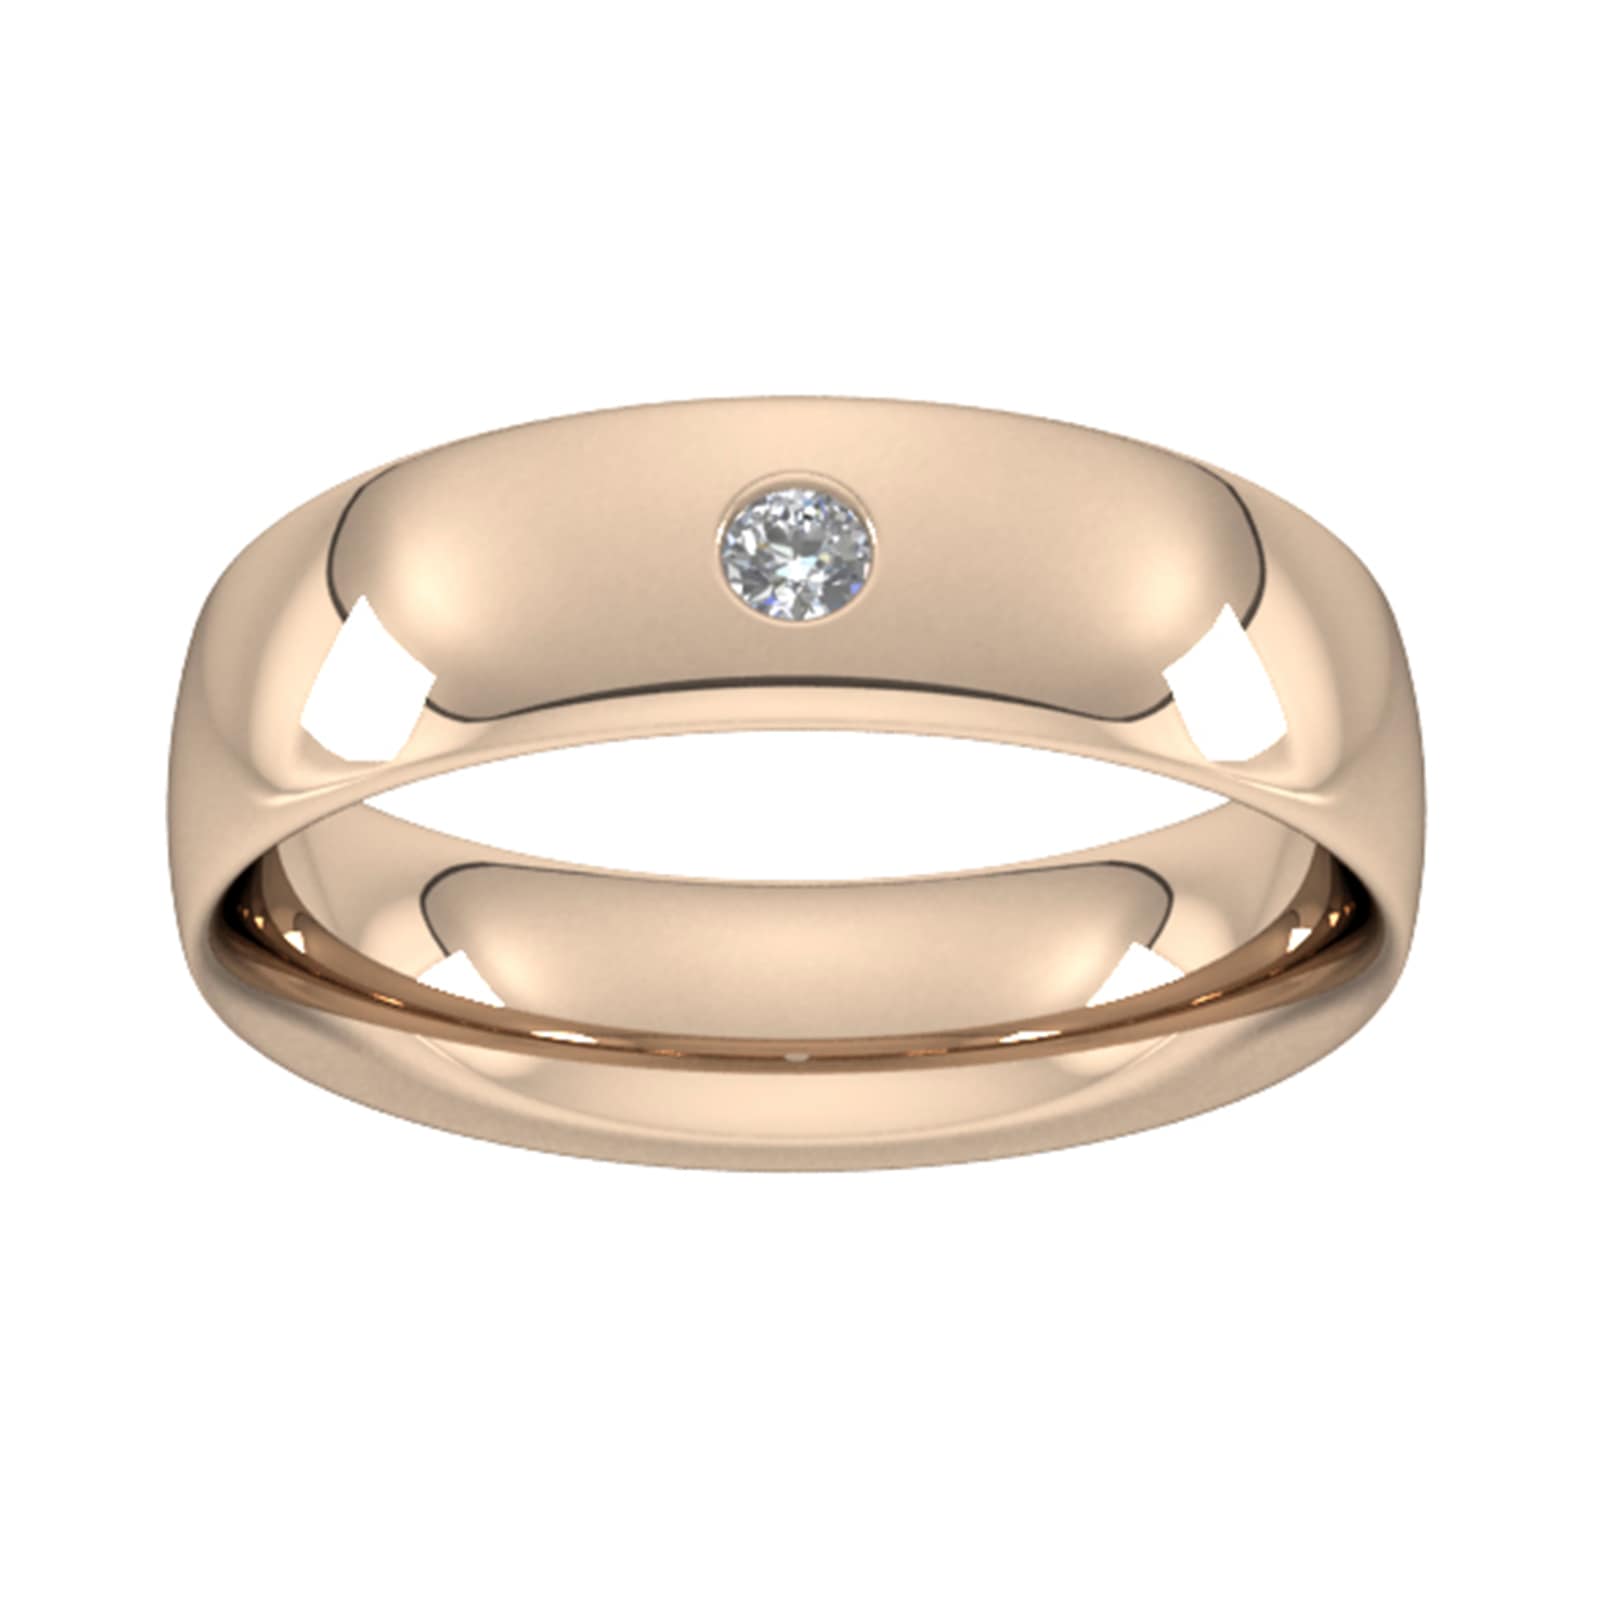 6mm Brilliant Cut Diamond Set Wedding Ring In 18 Carat Rose Gold - Ring Size S